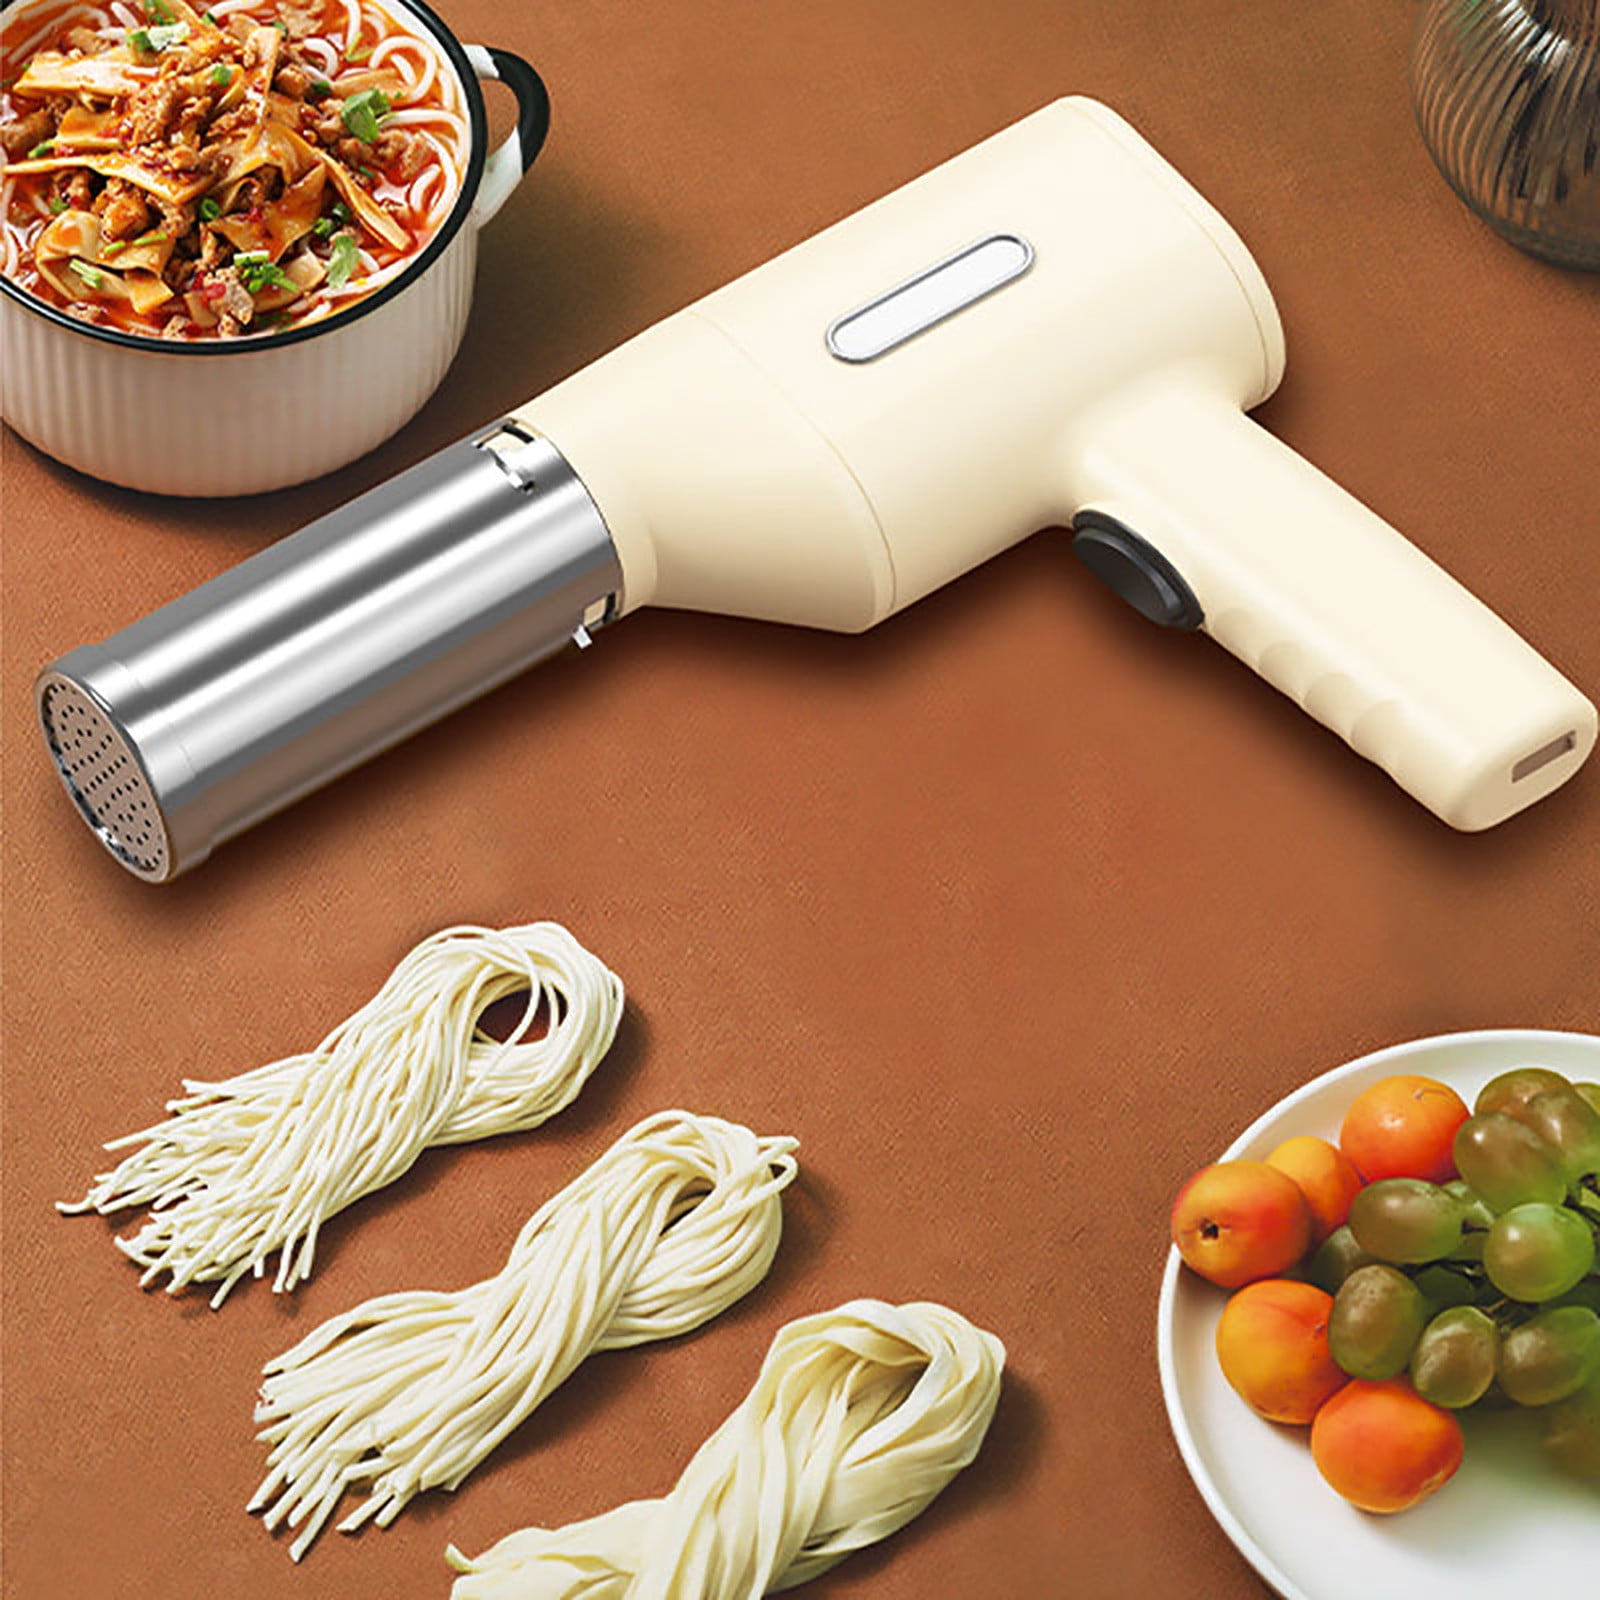 Li HB Store Household Electric Cordless Pasta Maker Noodle